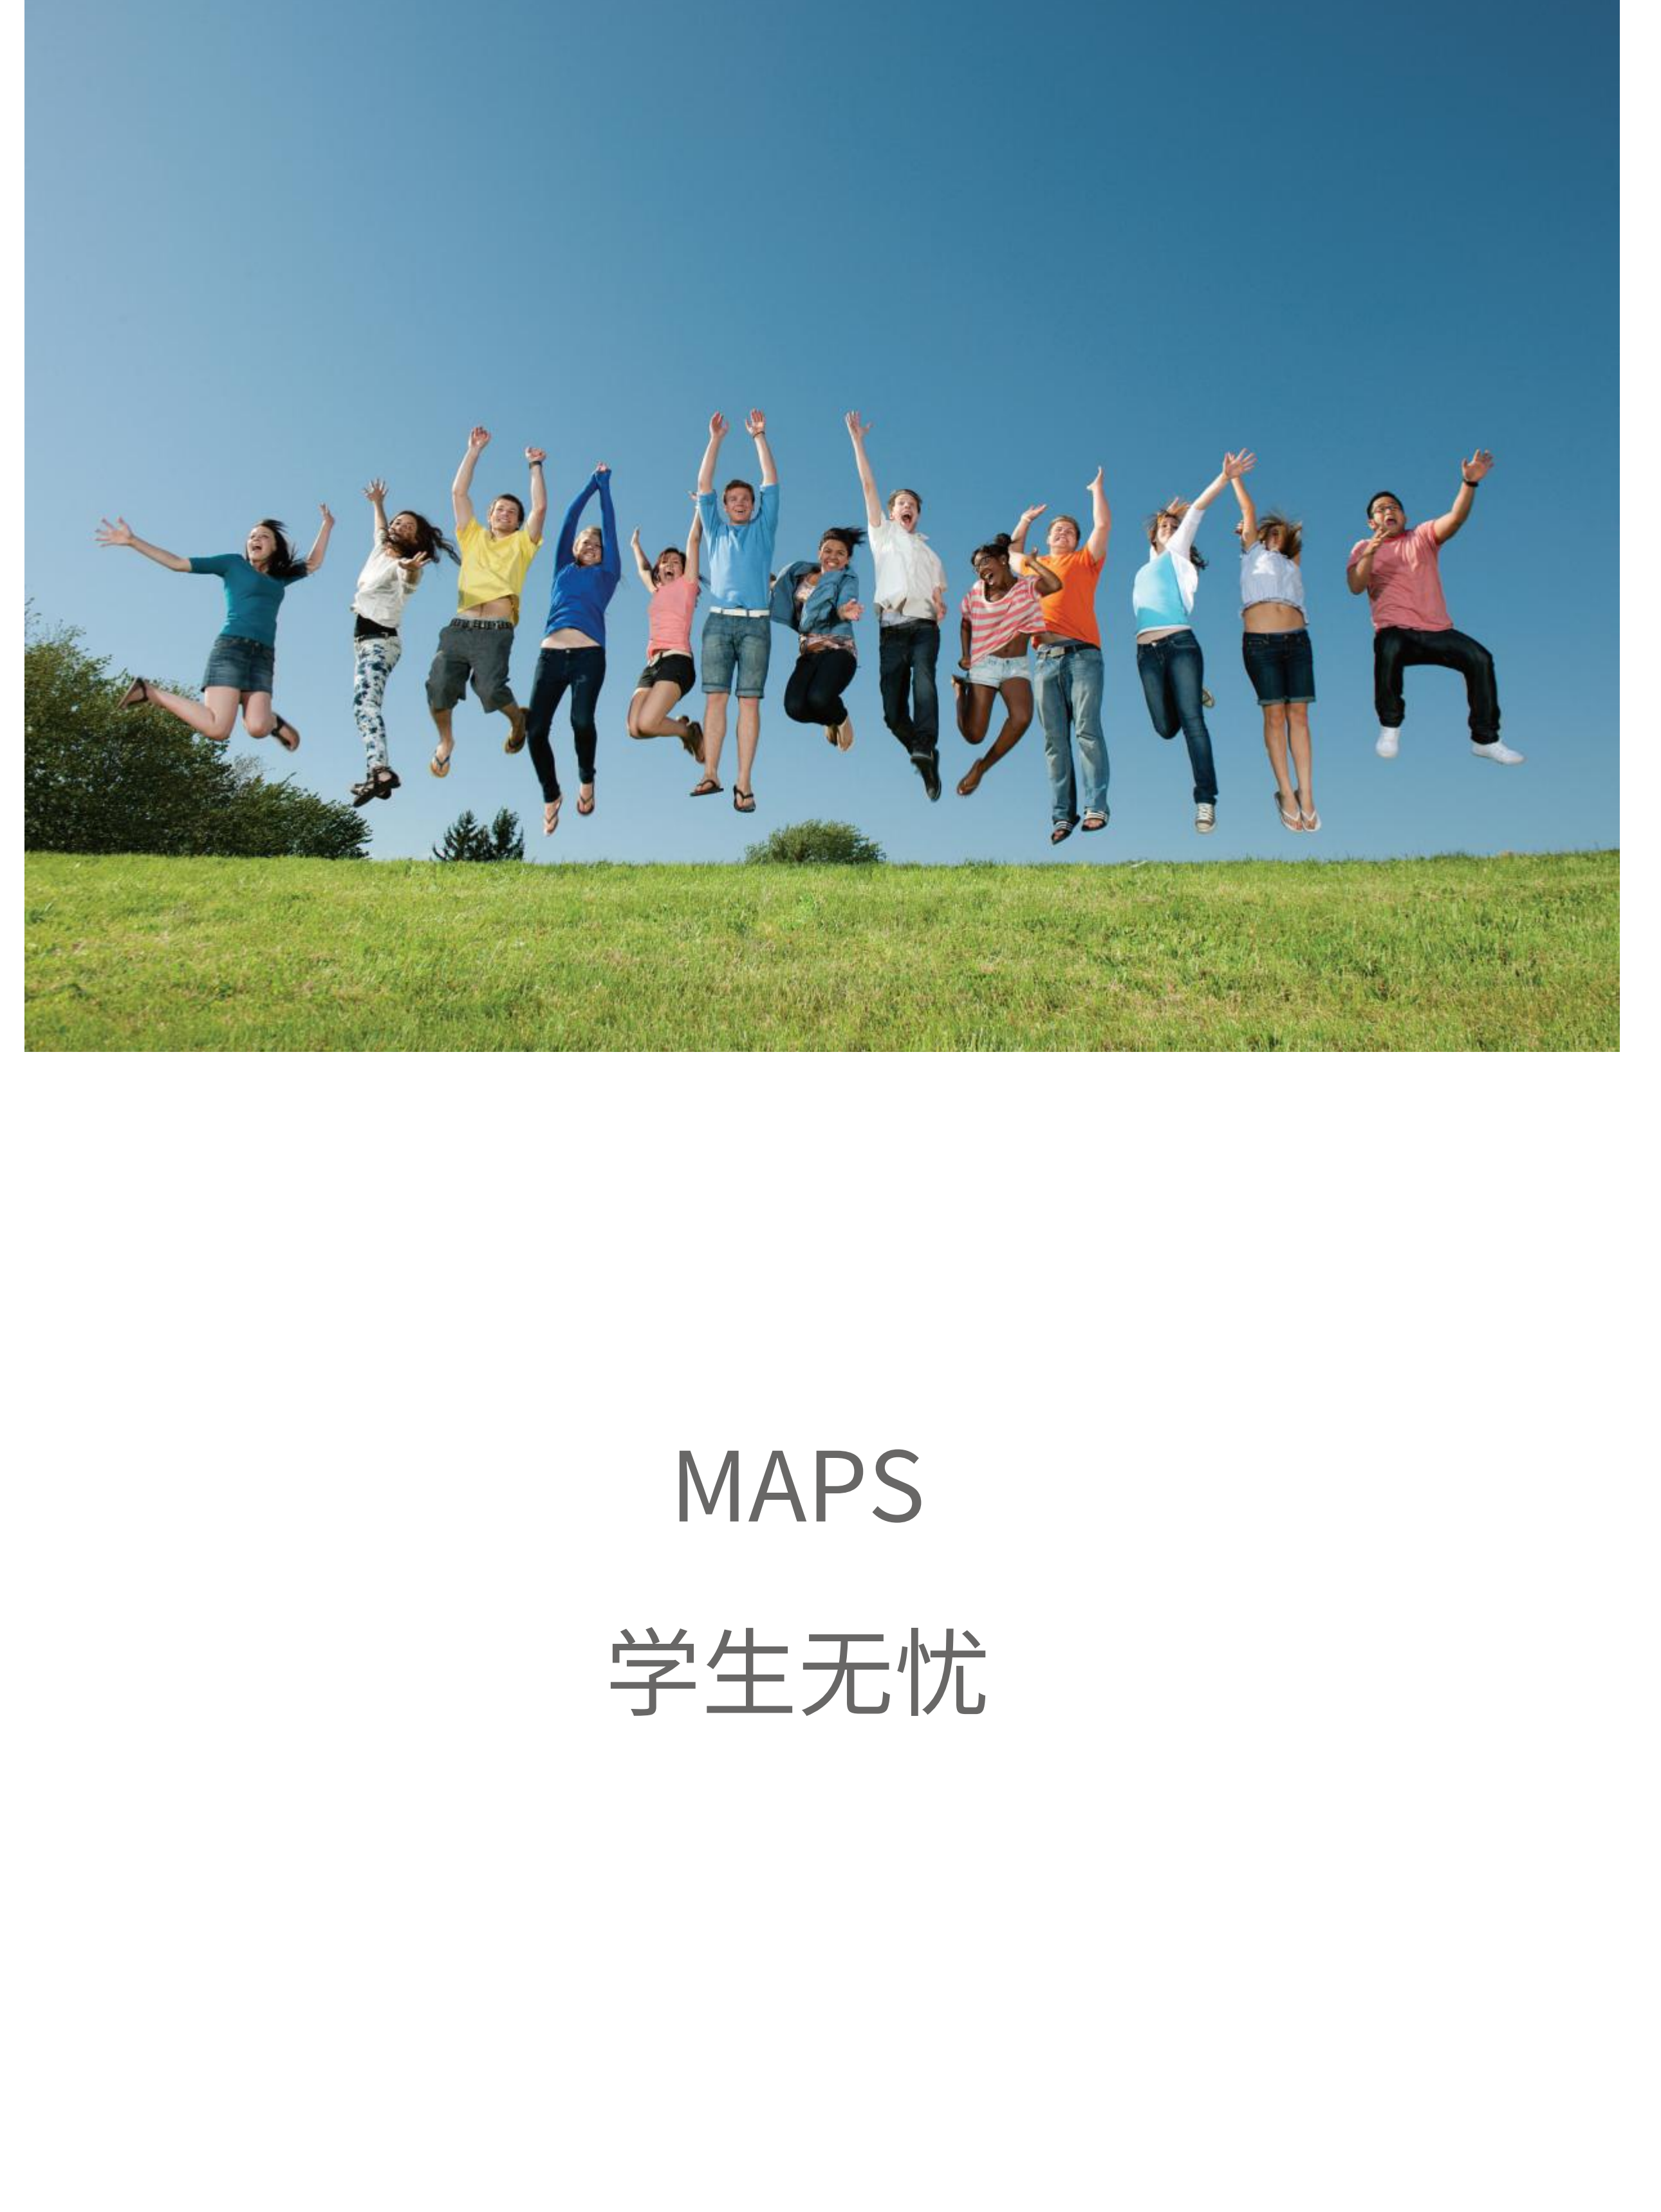 （已压缩）MAPS宣传册画册_012.png